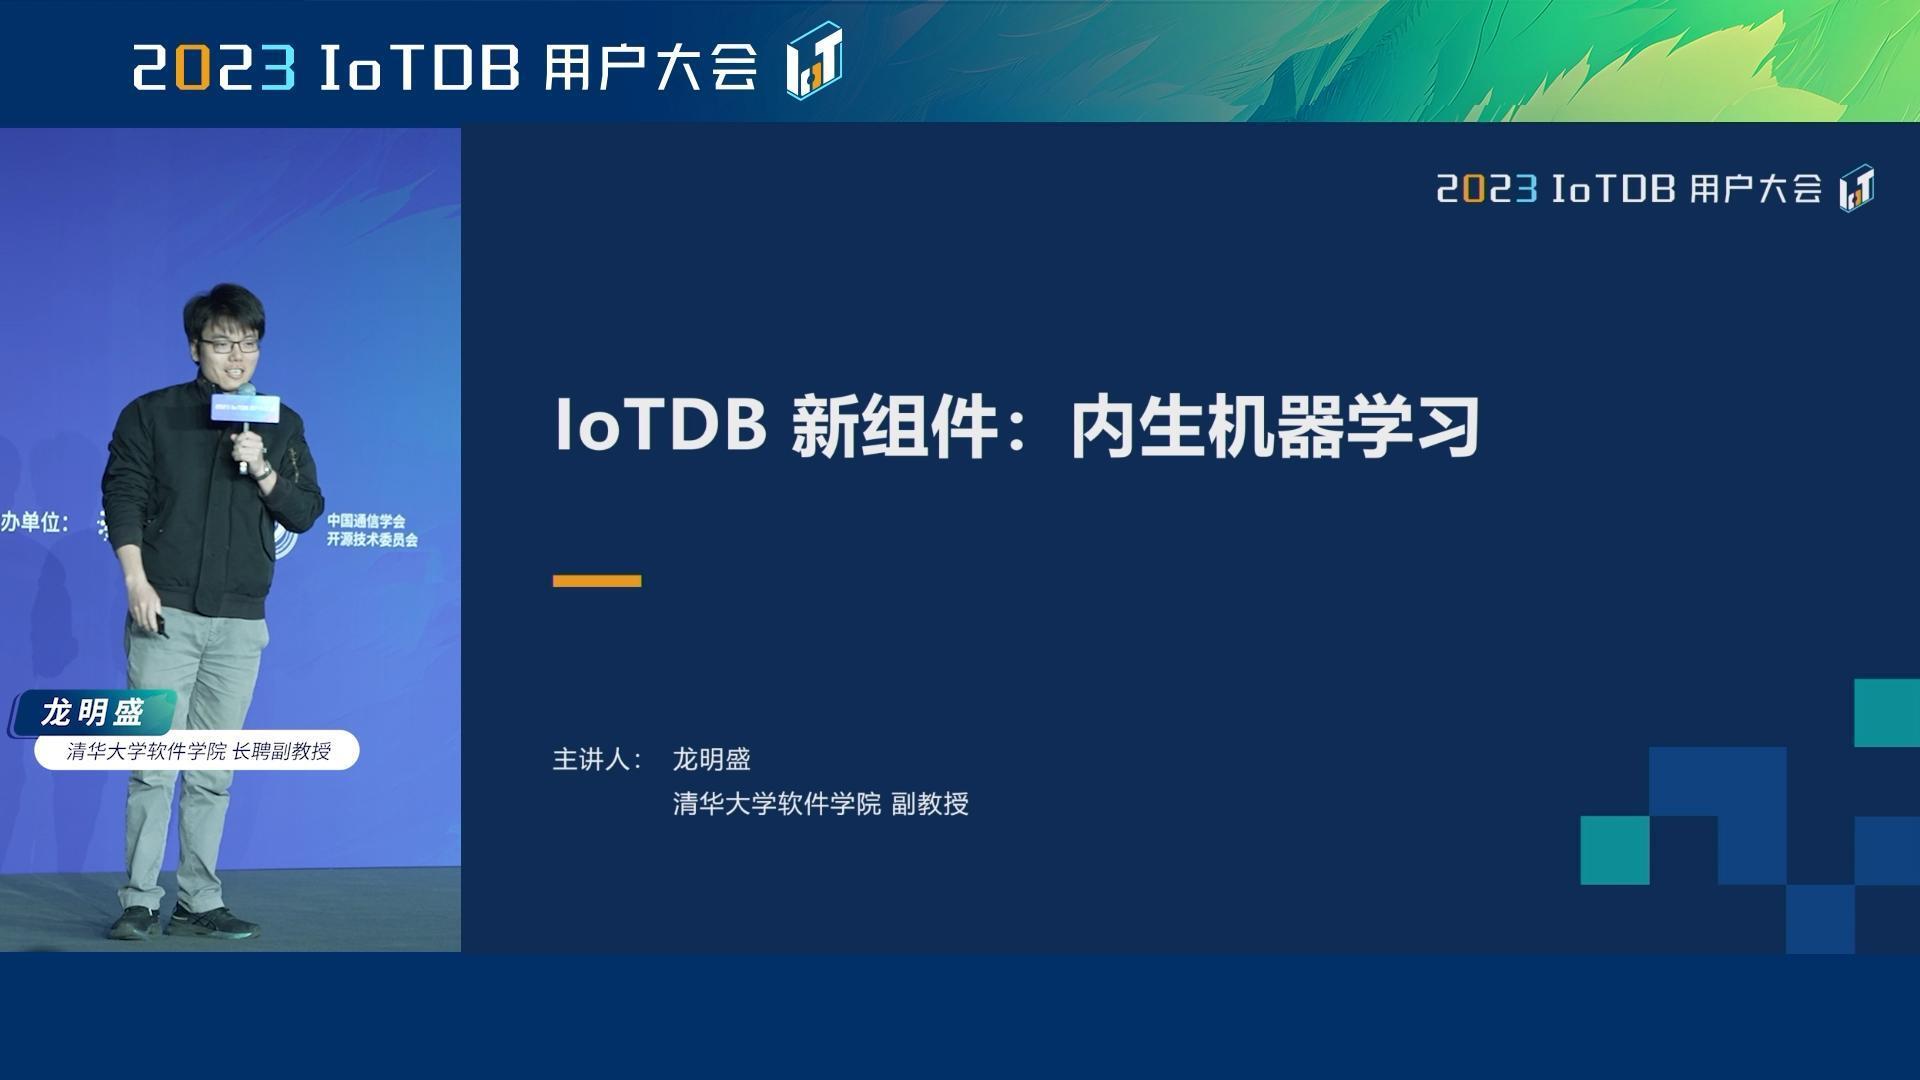 2023 IoTDB Summit：清华大学软件学院长聘副教授龙明盛《IoTDB 新组件：内生机器学习》